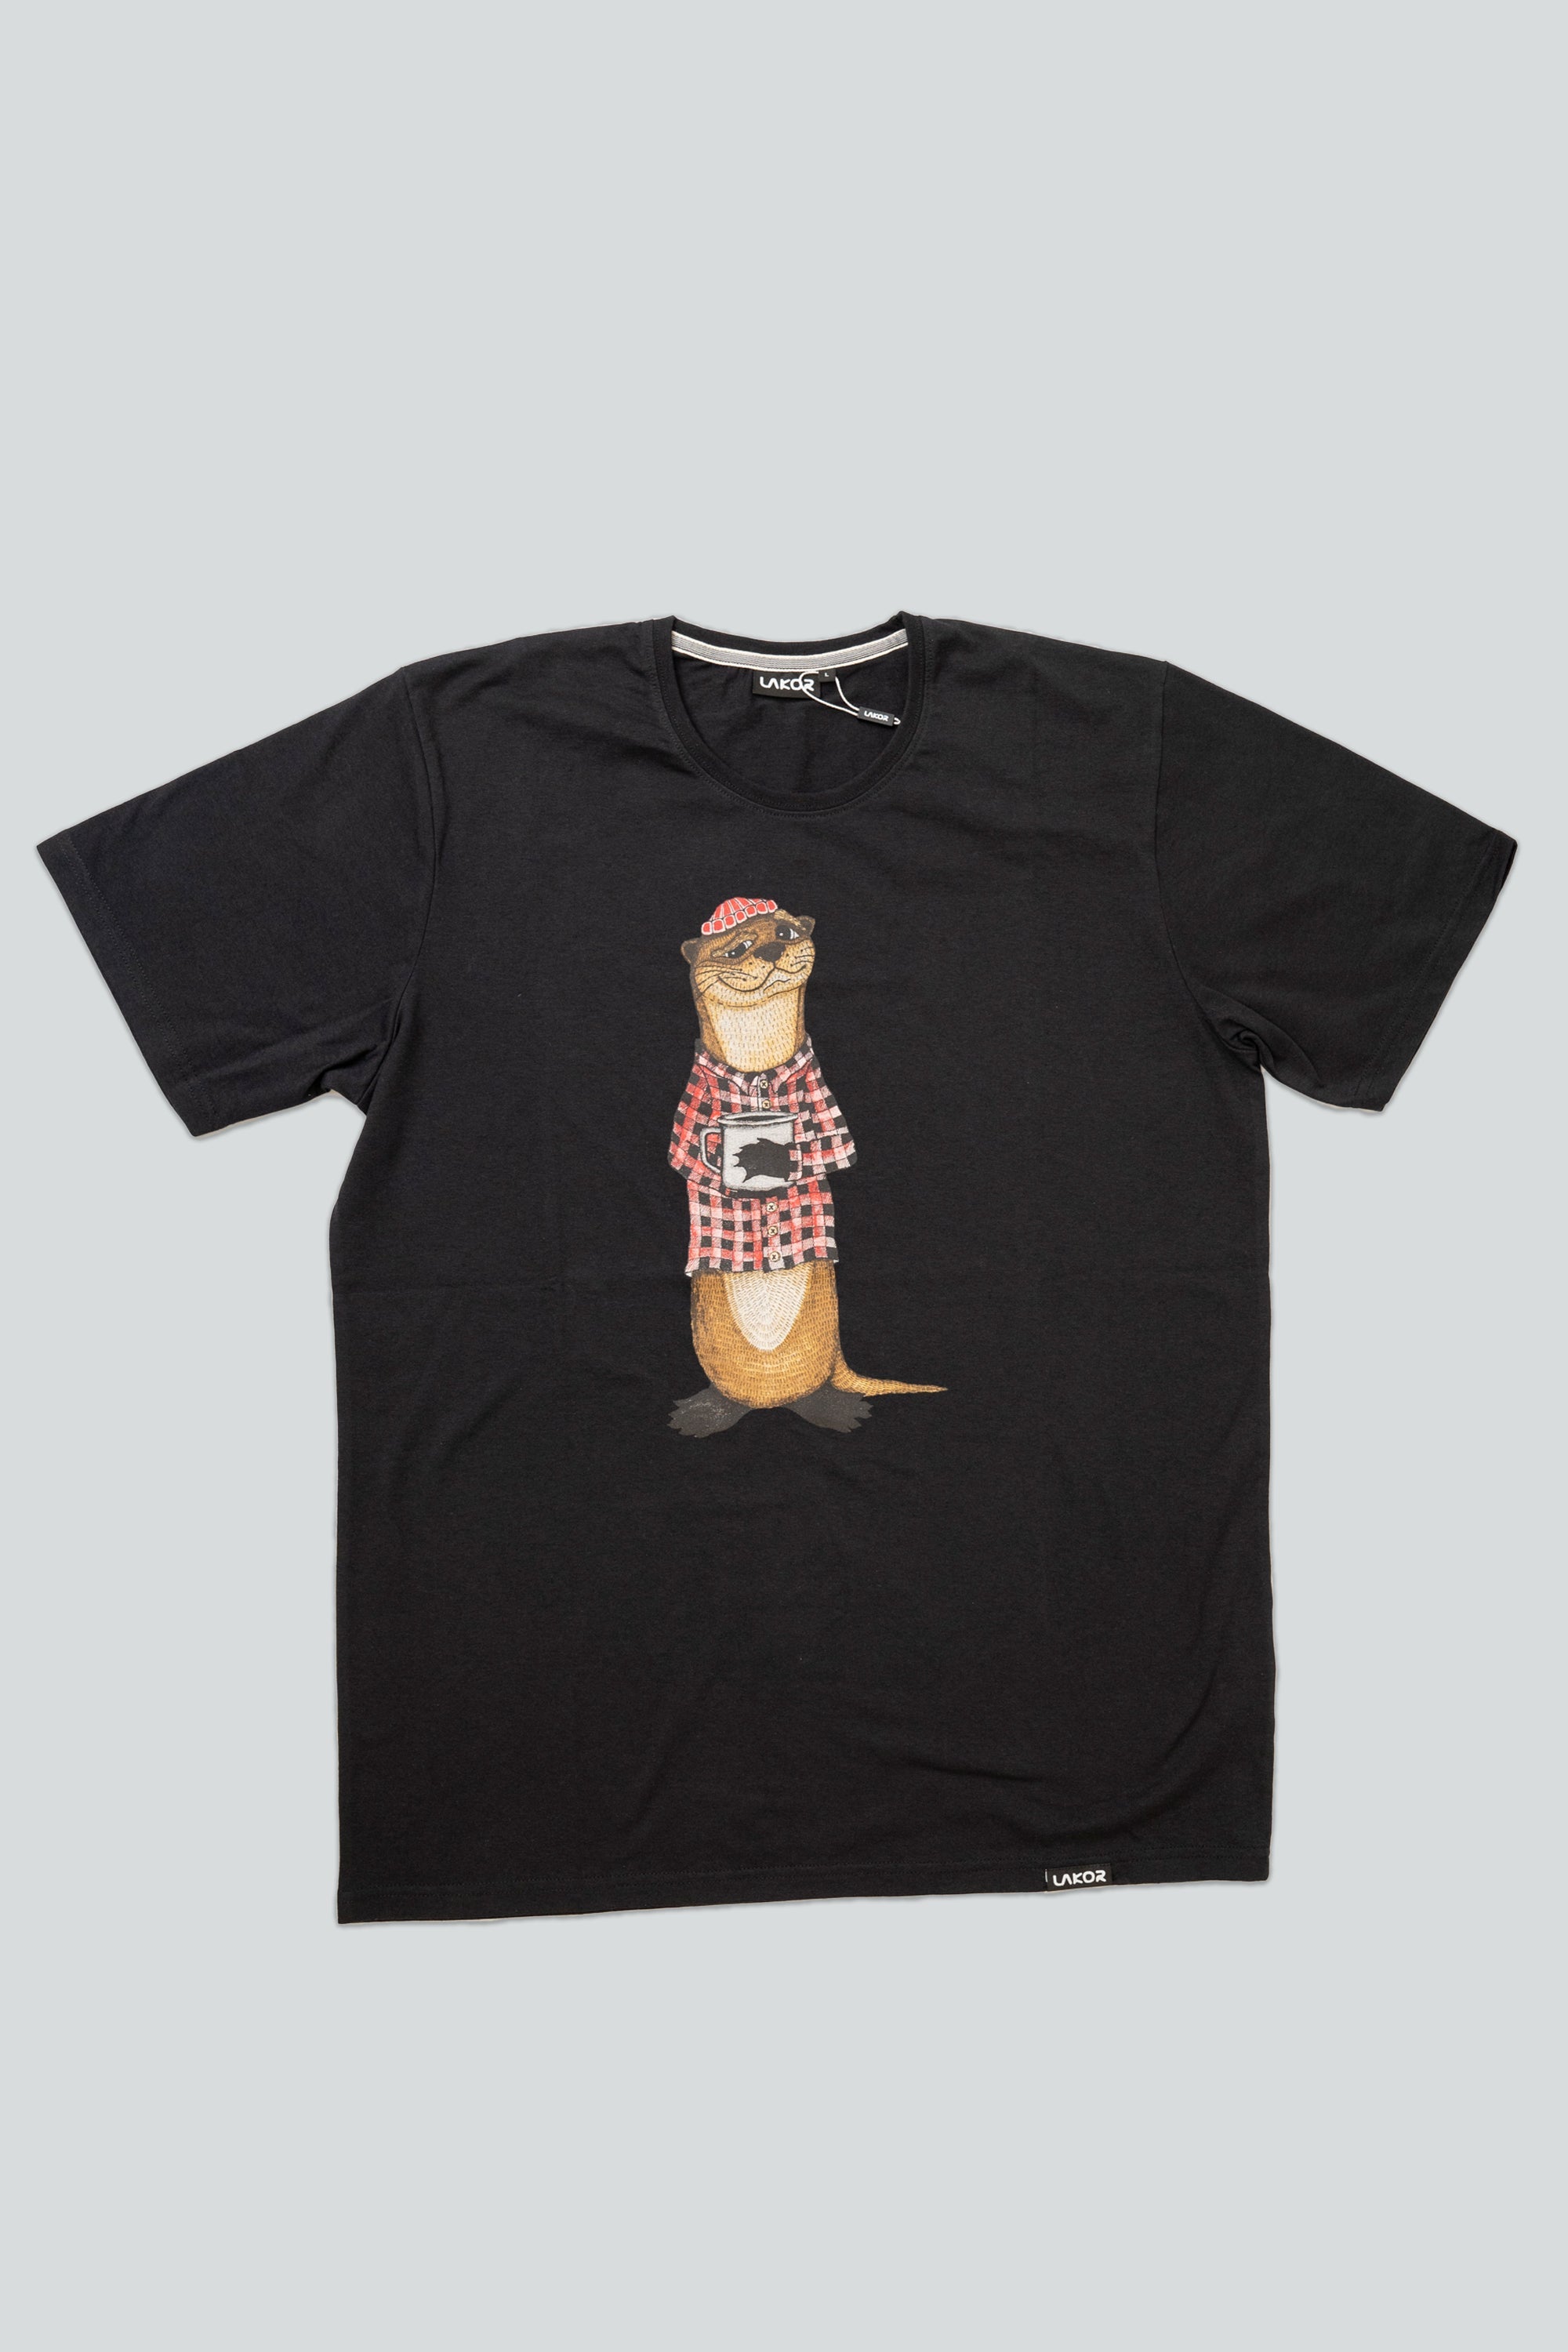 An Otter Coffee T-shirt (Black)